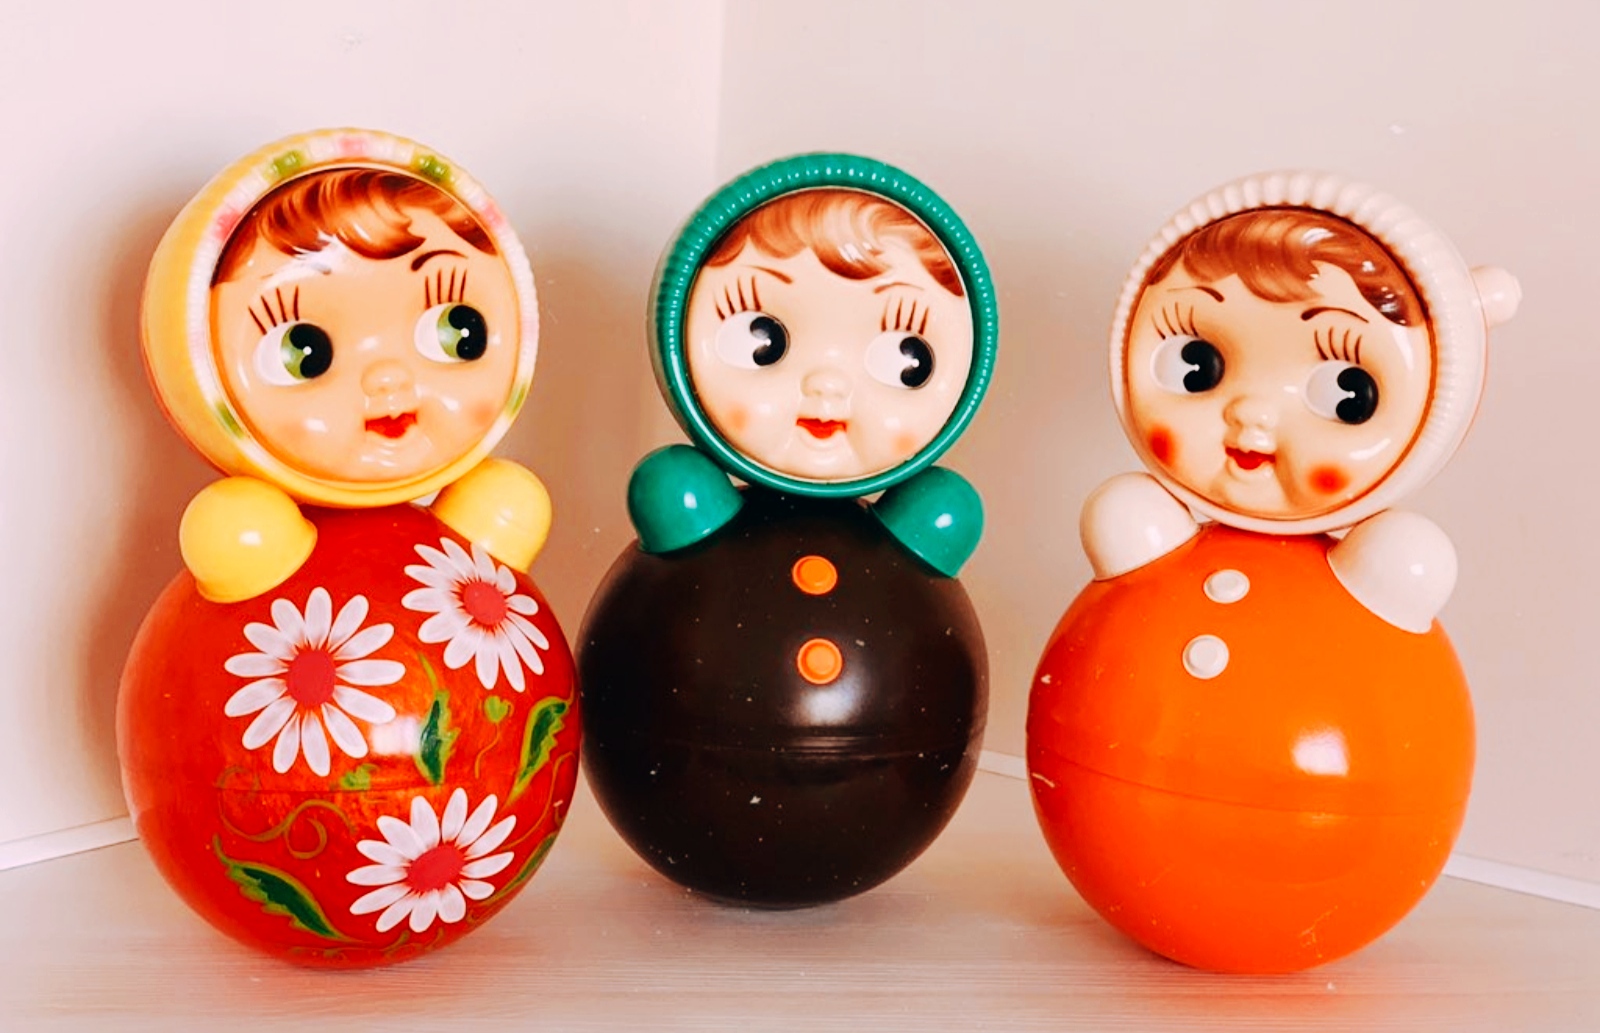 Mengenal Mainan Anak-anak Rusia Boneka Nevalyashka